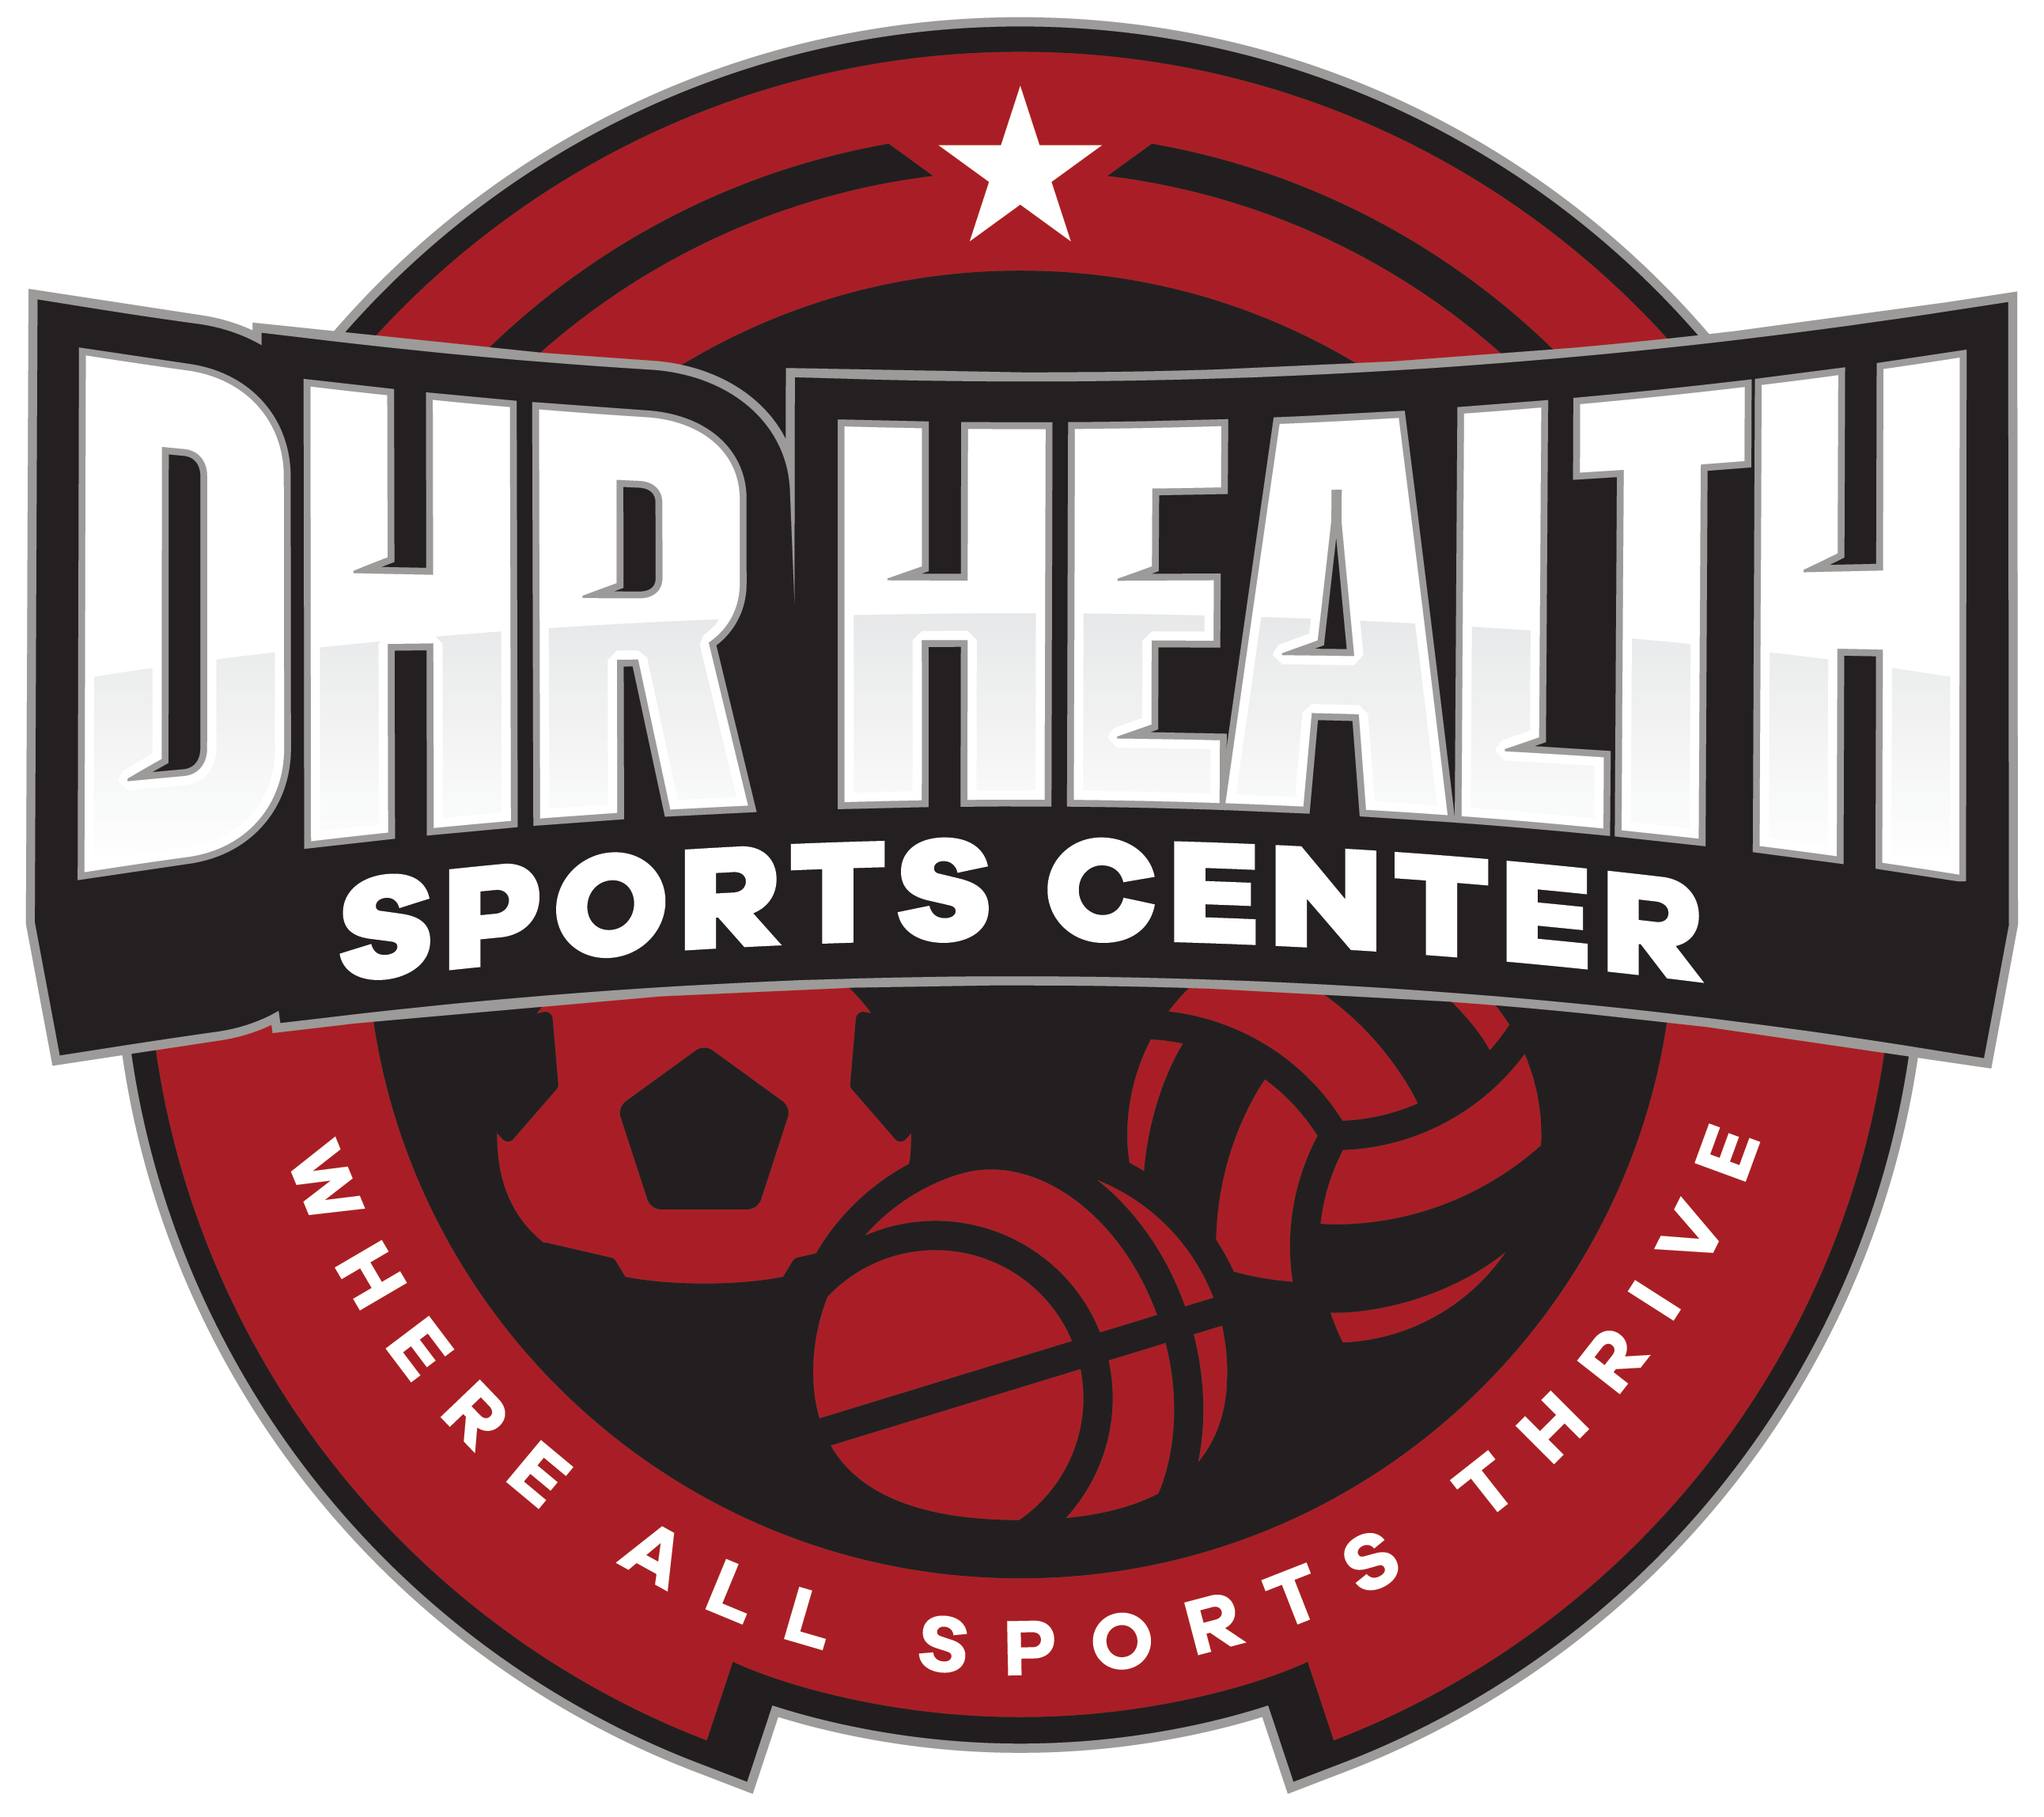 DHRSportsCenter_logo website1